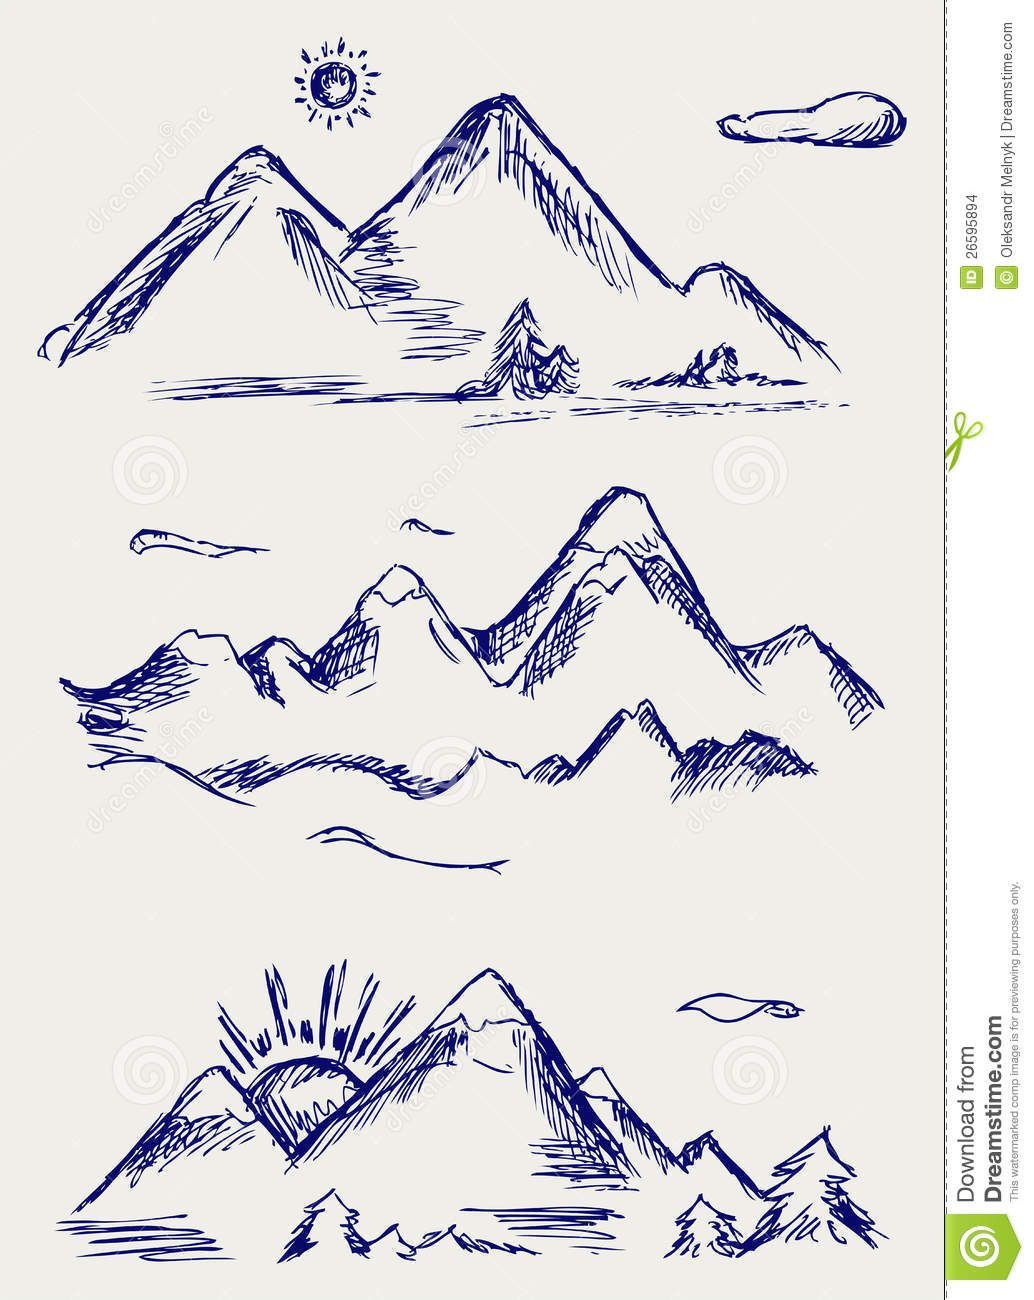 simple mountain tattoo - Google Search                                                                                                                                                                                 More -   20 mountain tattoo ribs
 ideas